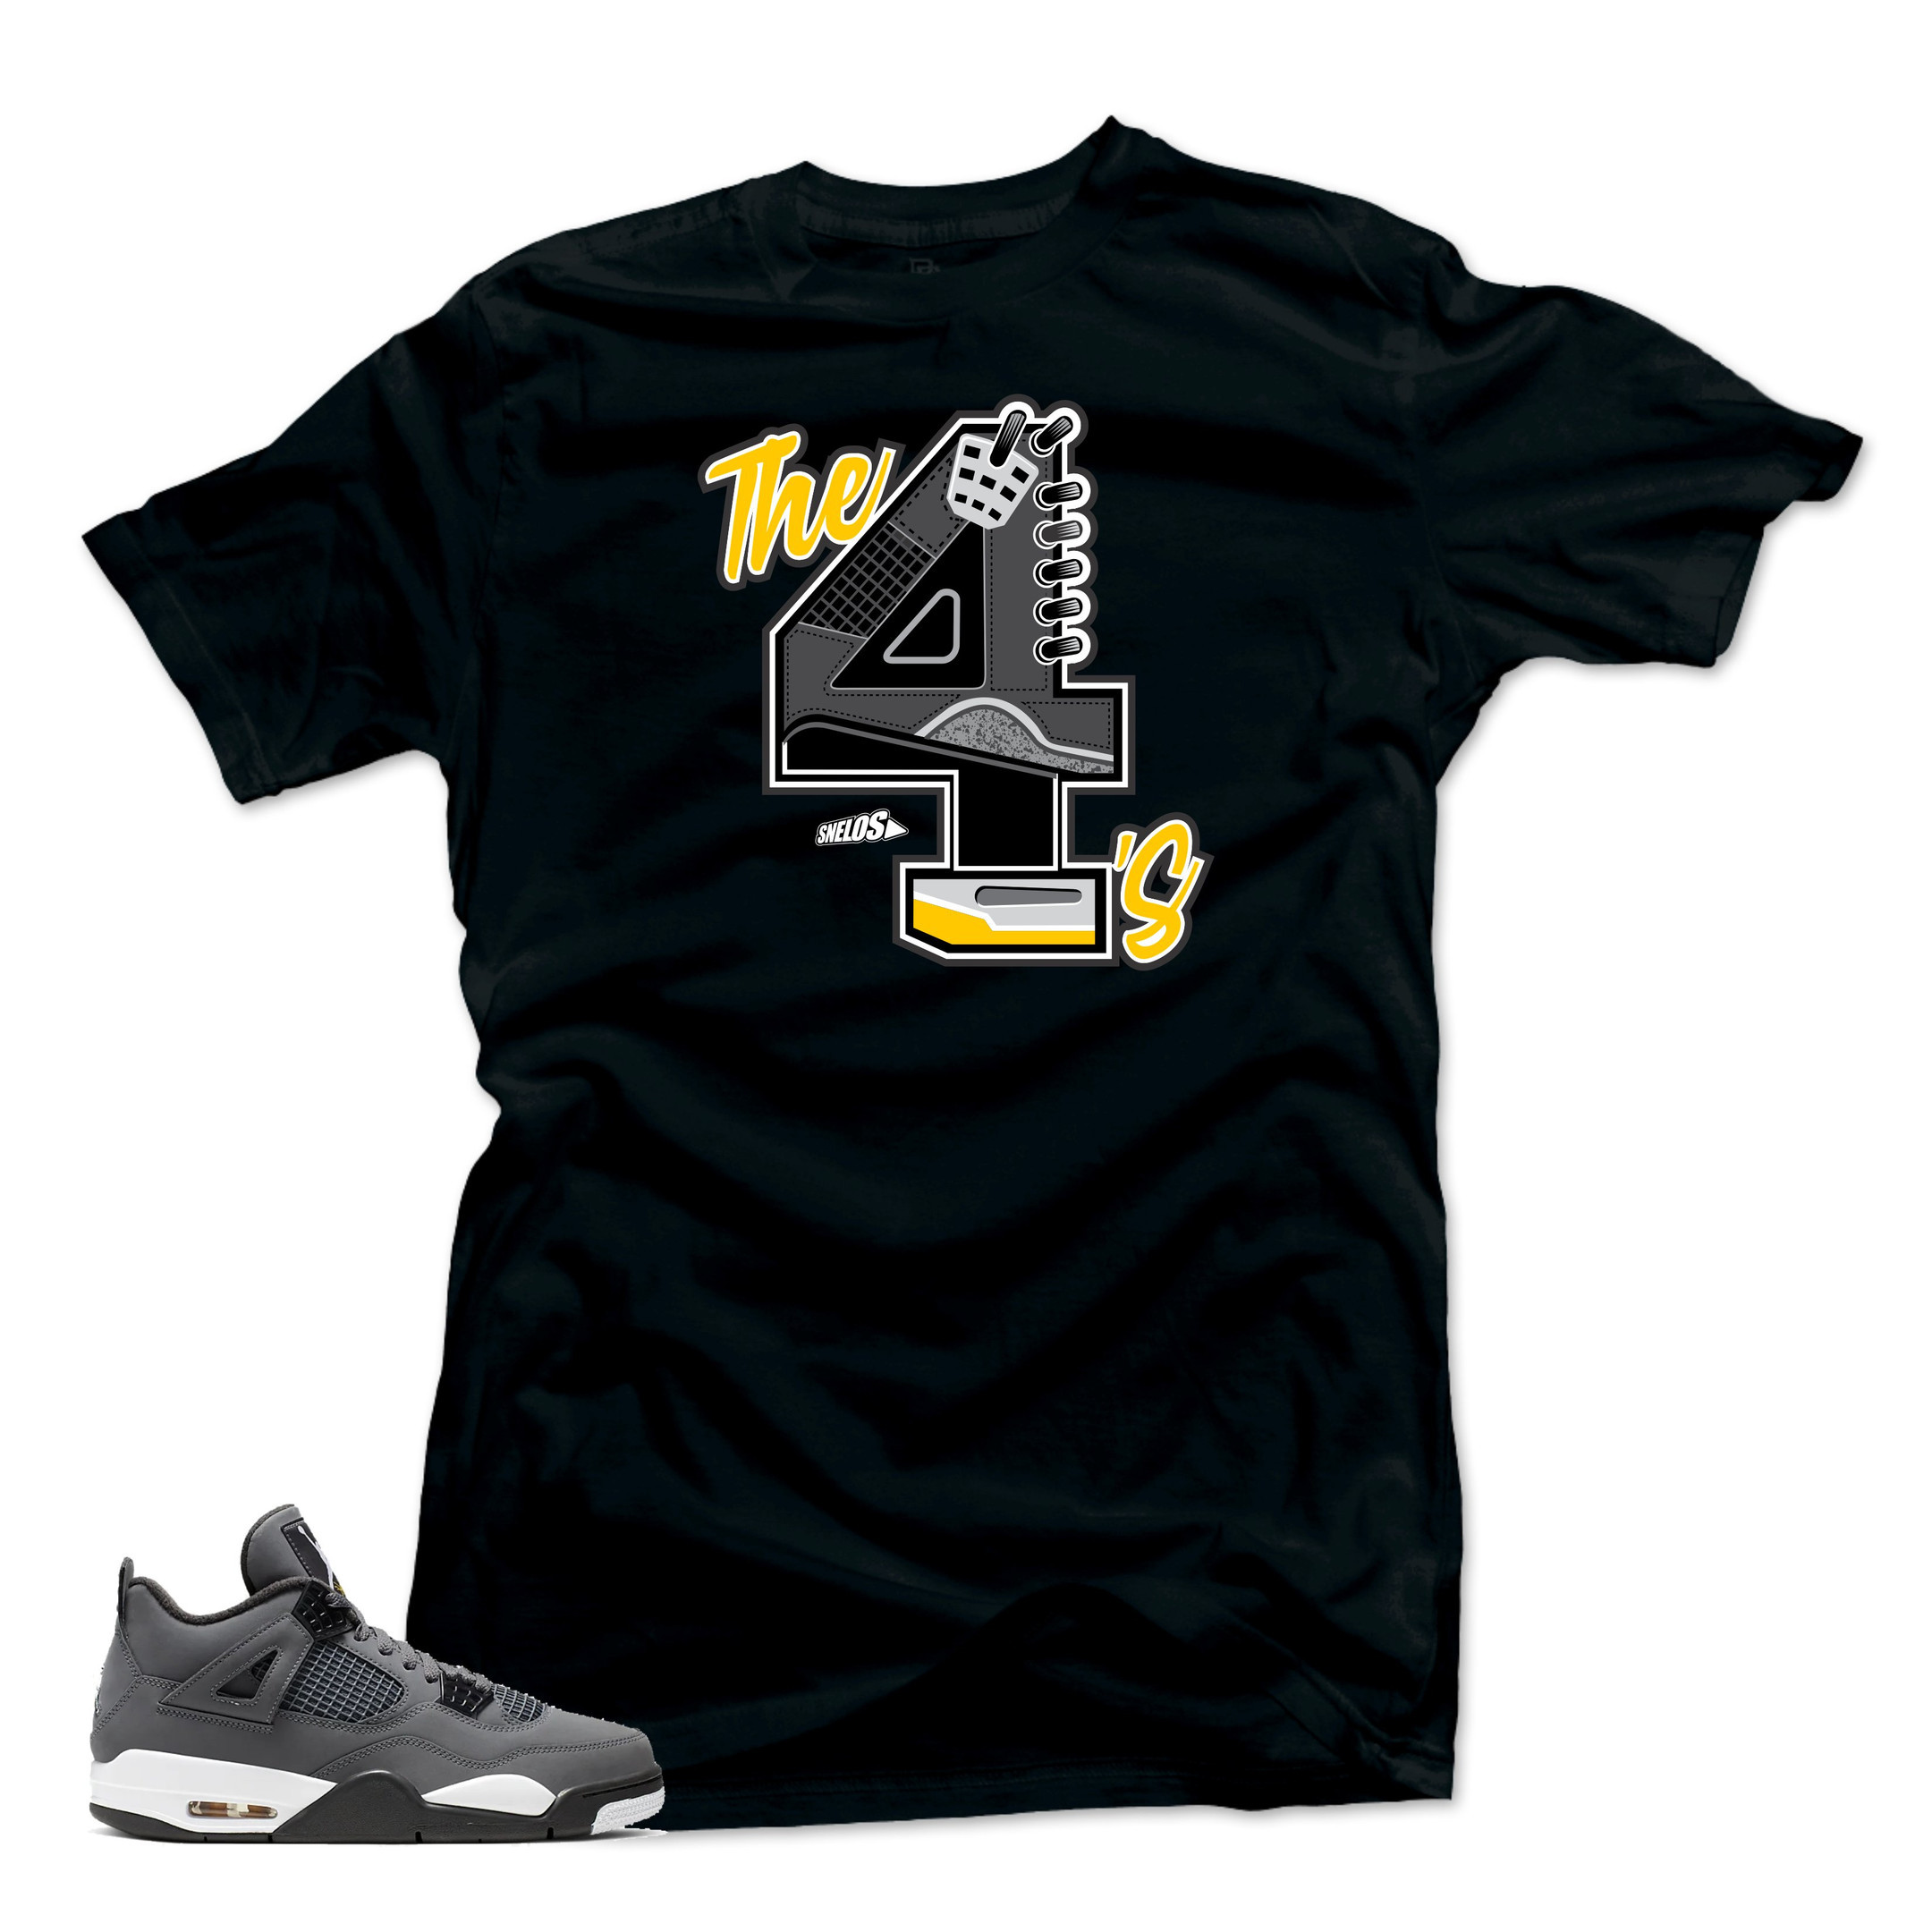 Jordan Retro 4 Cool Grey Match Snelos Tees Shirt-The 4's Black